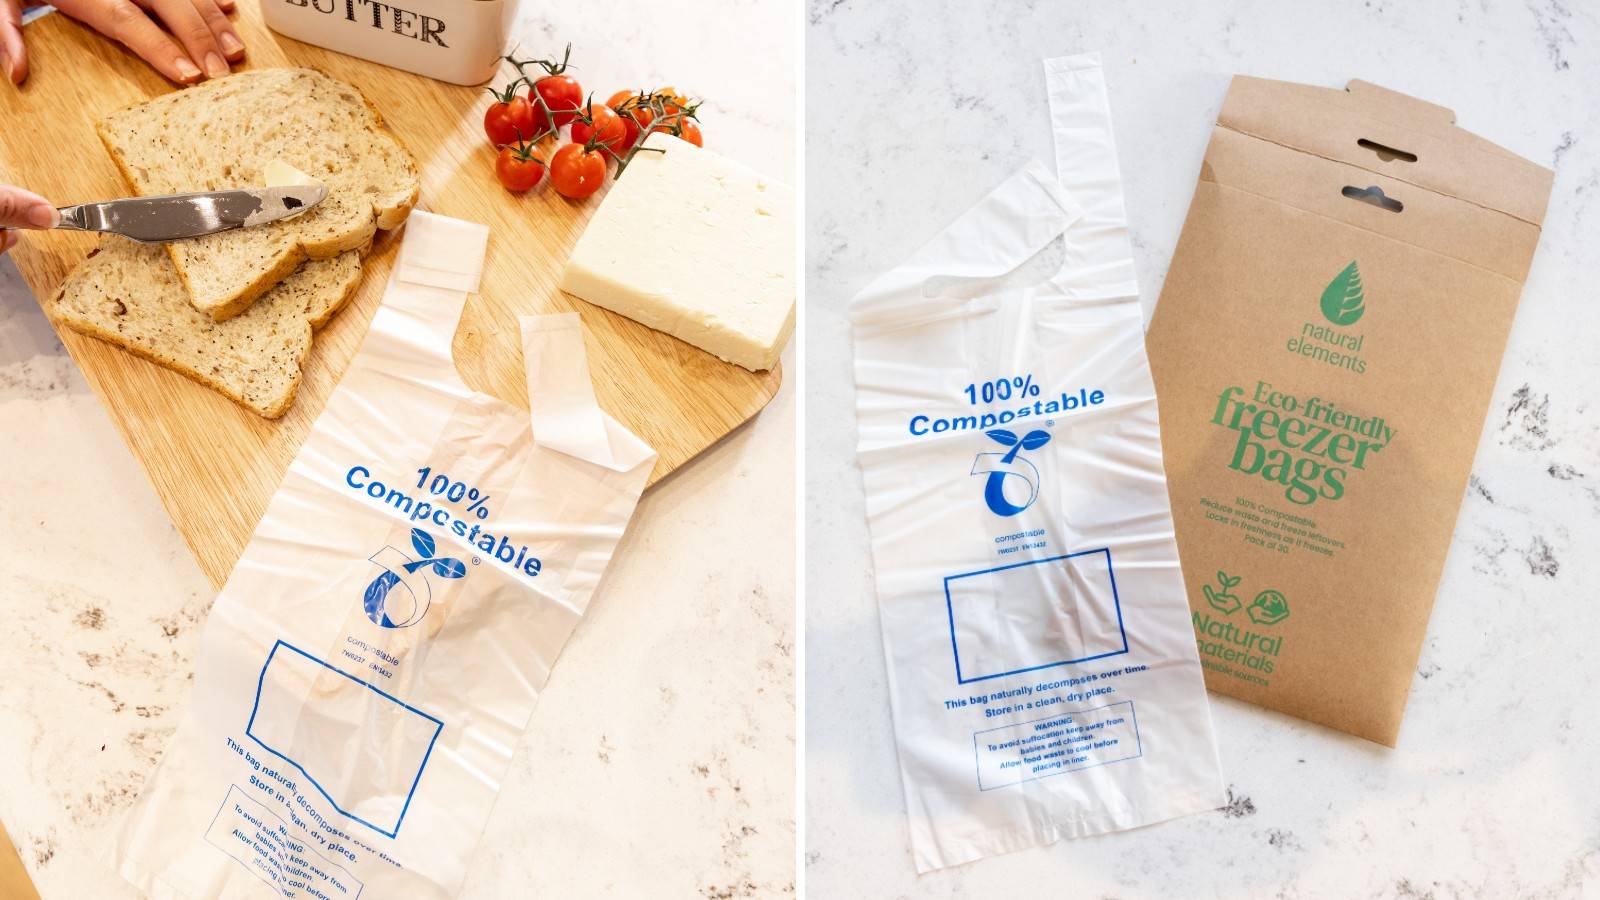 Natural Elements Eco-friendly Food & Freezer Bags